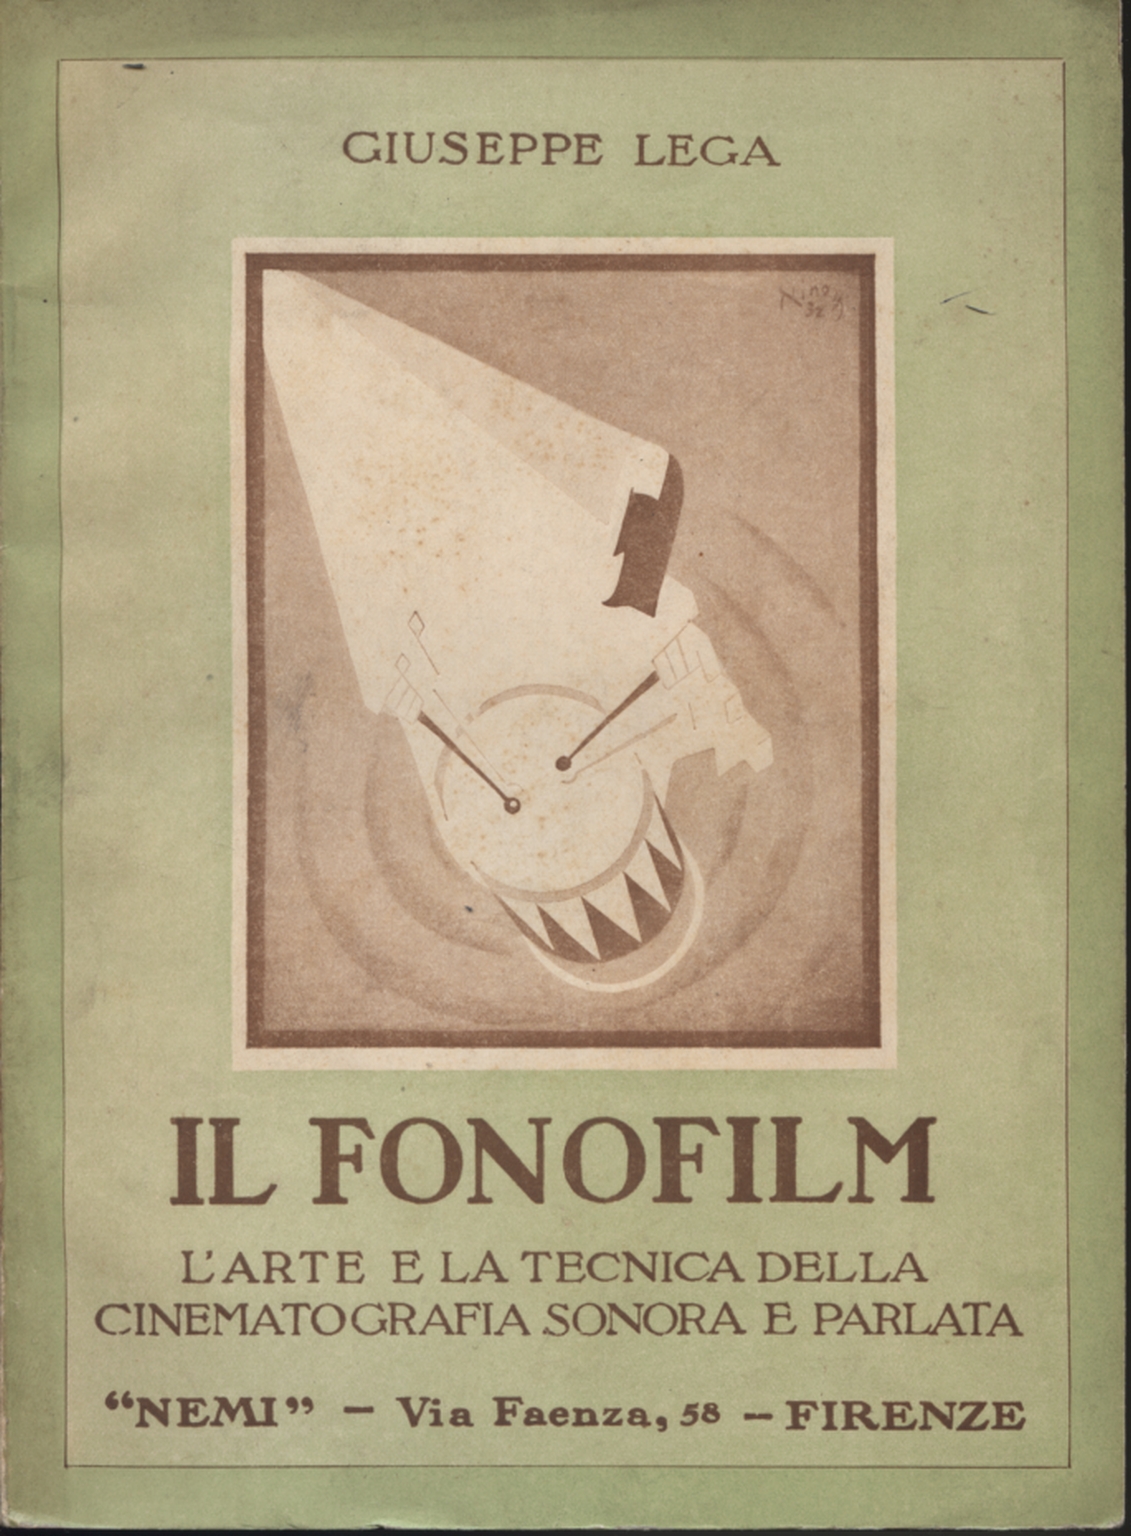 El fonofilm, Giuseppe Lega